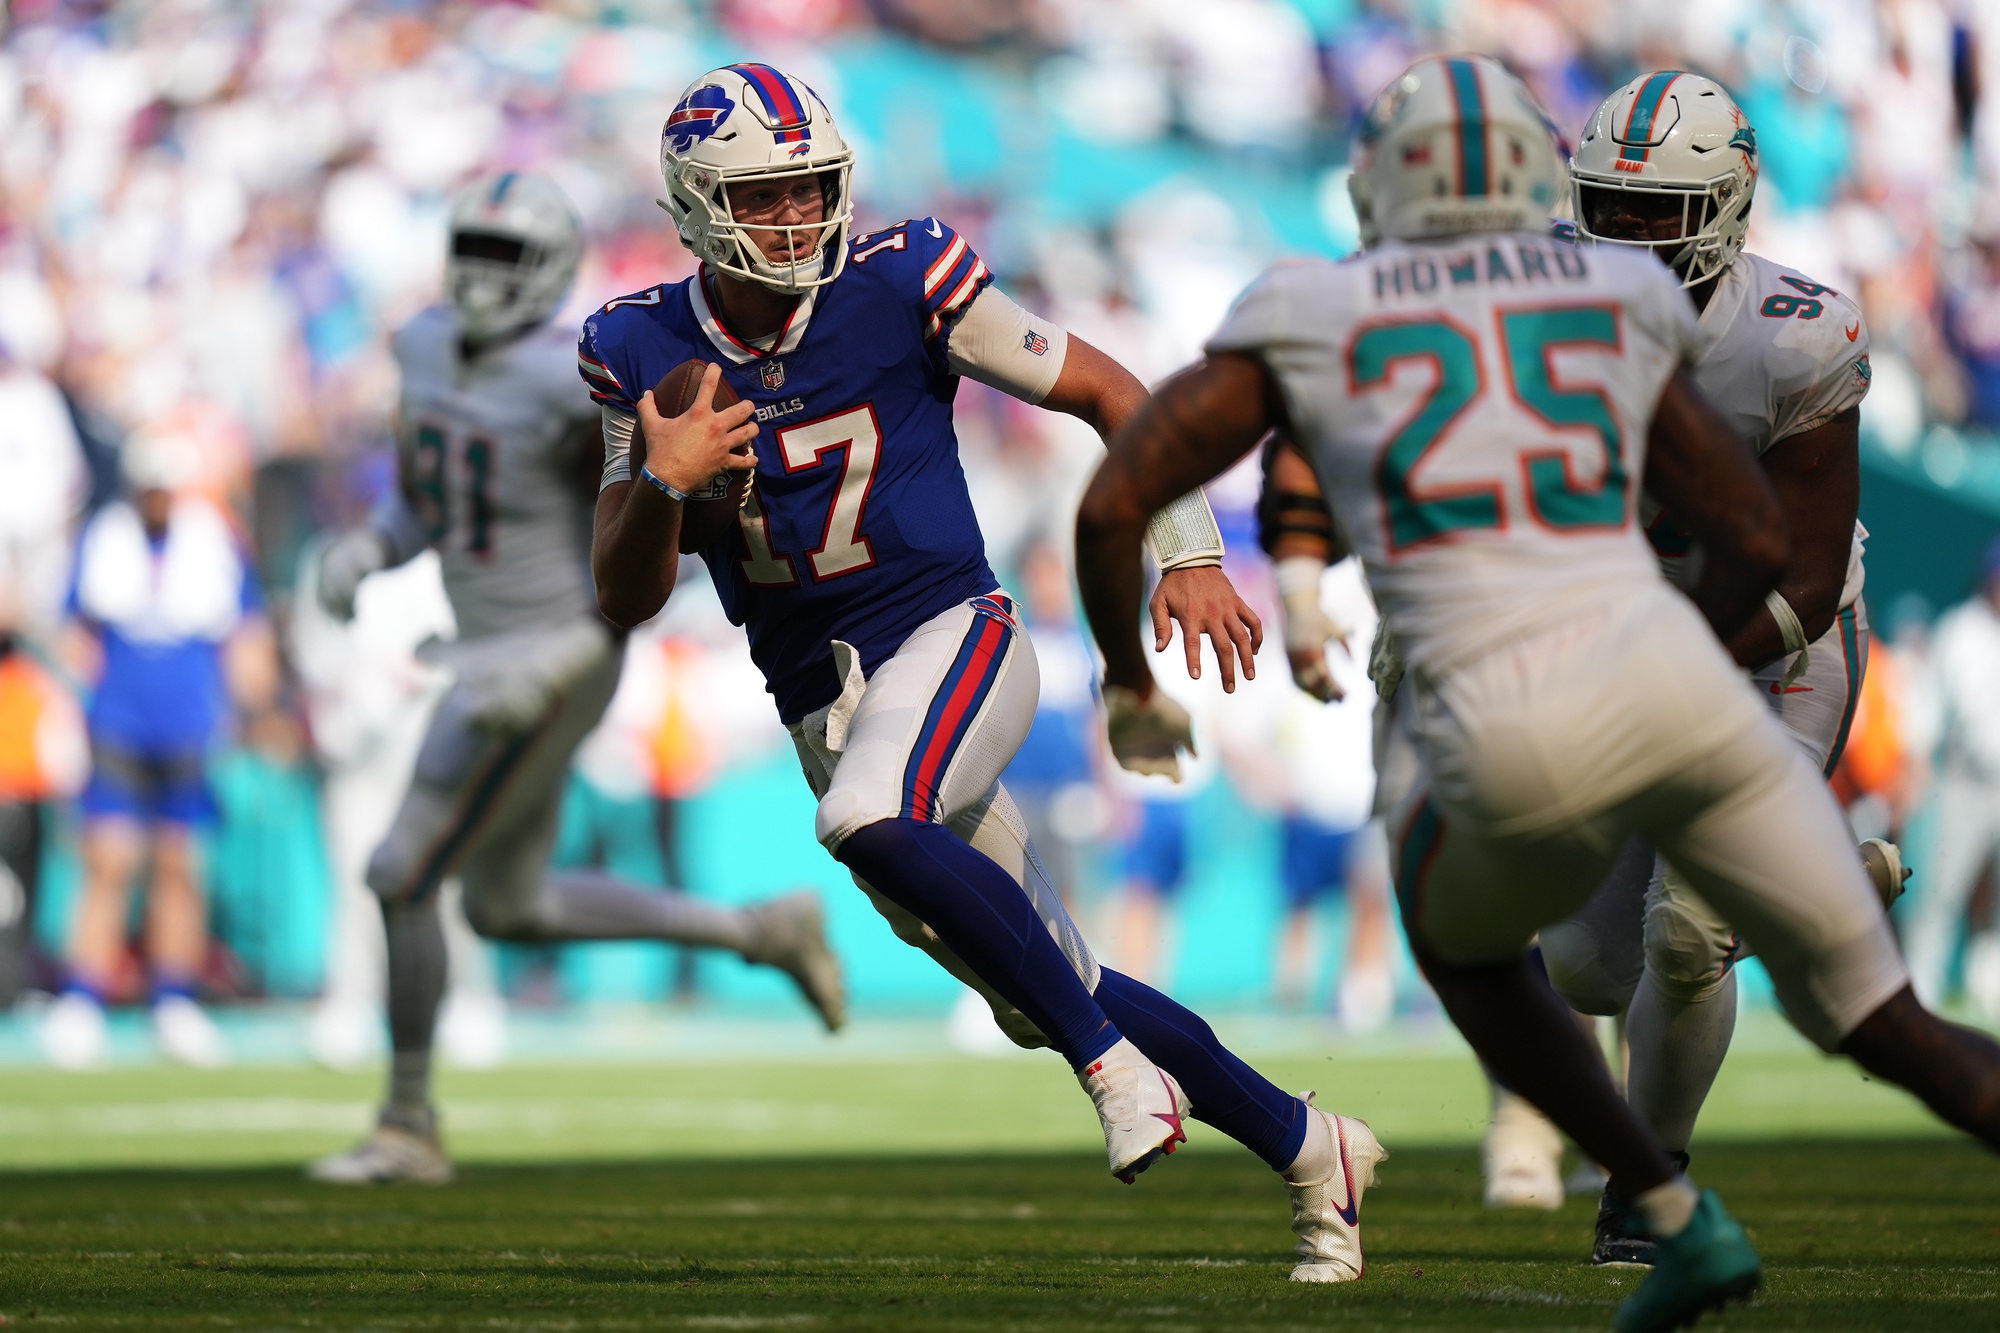 Buffalo Bills vs. Miami Dolphins Prediction and Preview